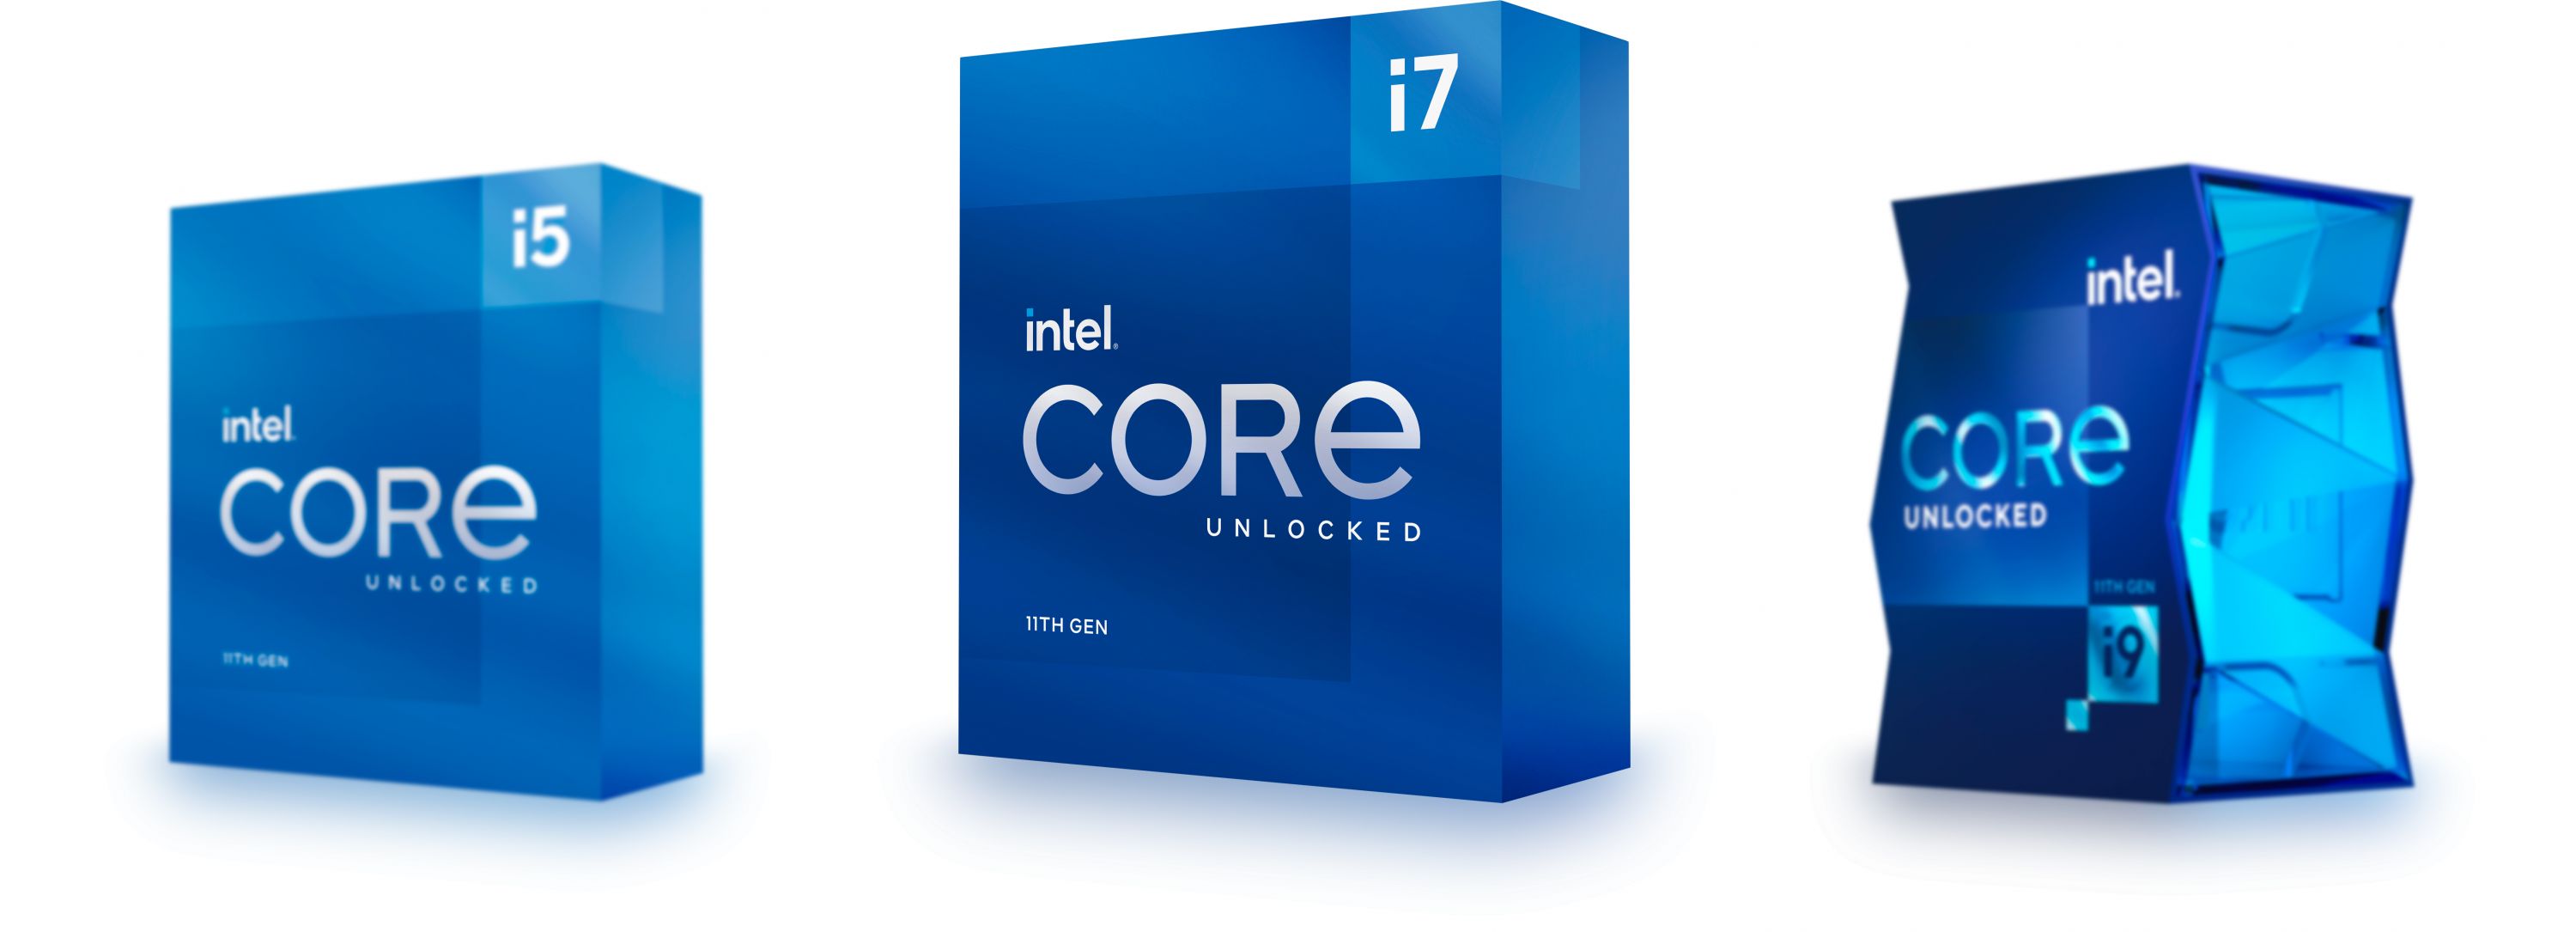 Intel 11th Gen Core i7 Rocket Lake LGA1200 Processors